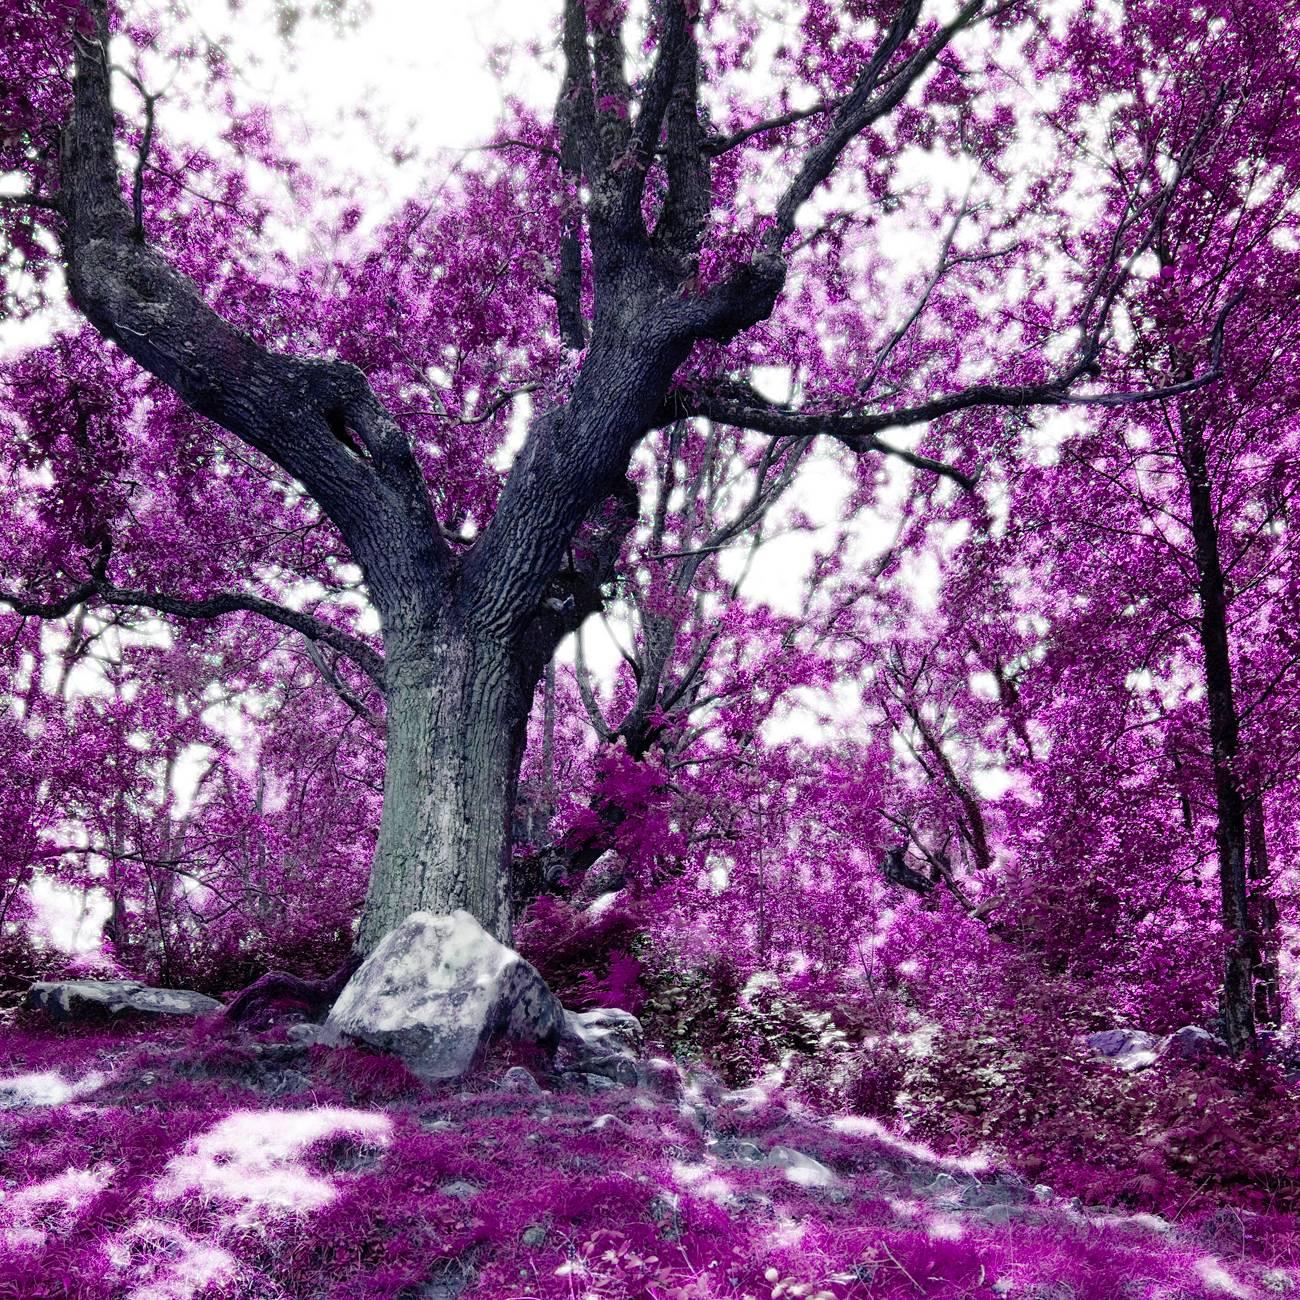 Albert Delamour Landscape Photograph - Wonderland, Landscape with old Tree, Magenta/Pink tone